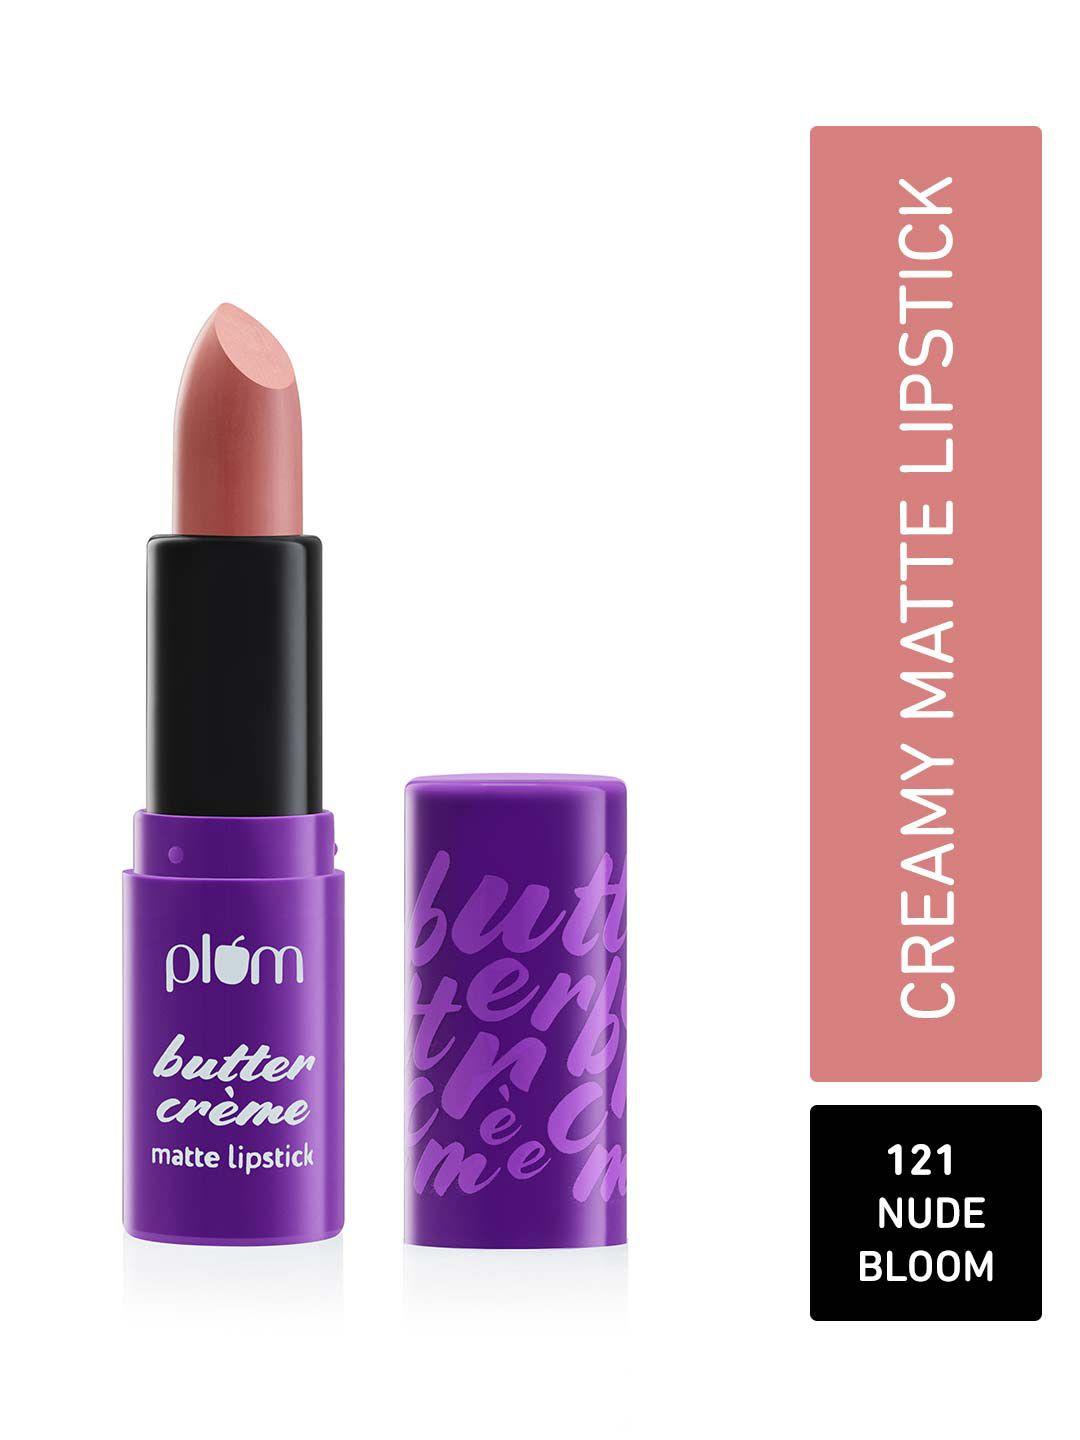 plum butter creme highly pigmented lightweight matte lipstick - nude bloom 121